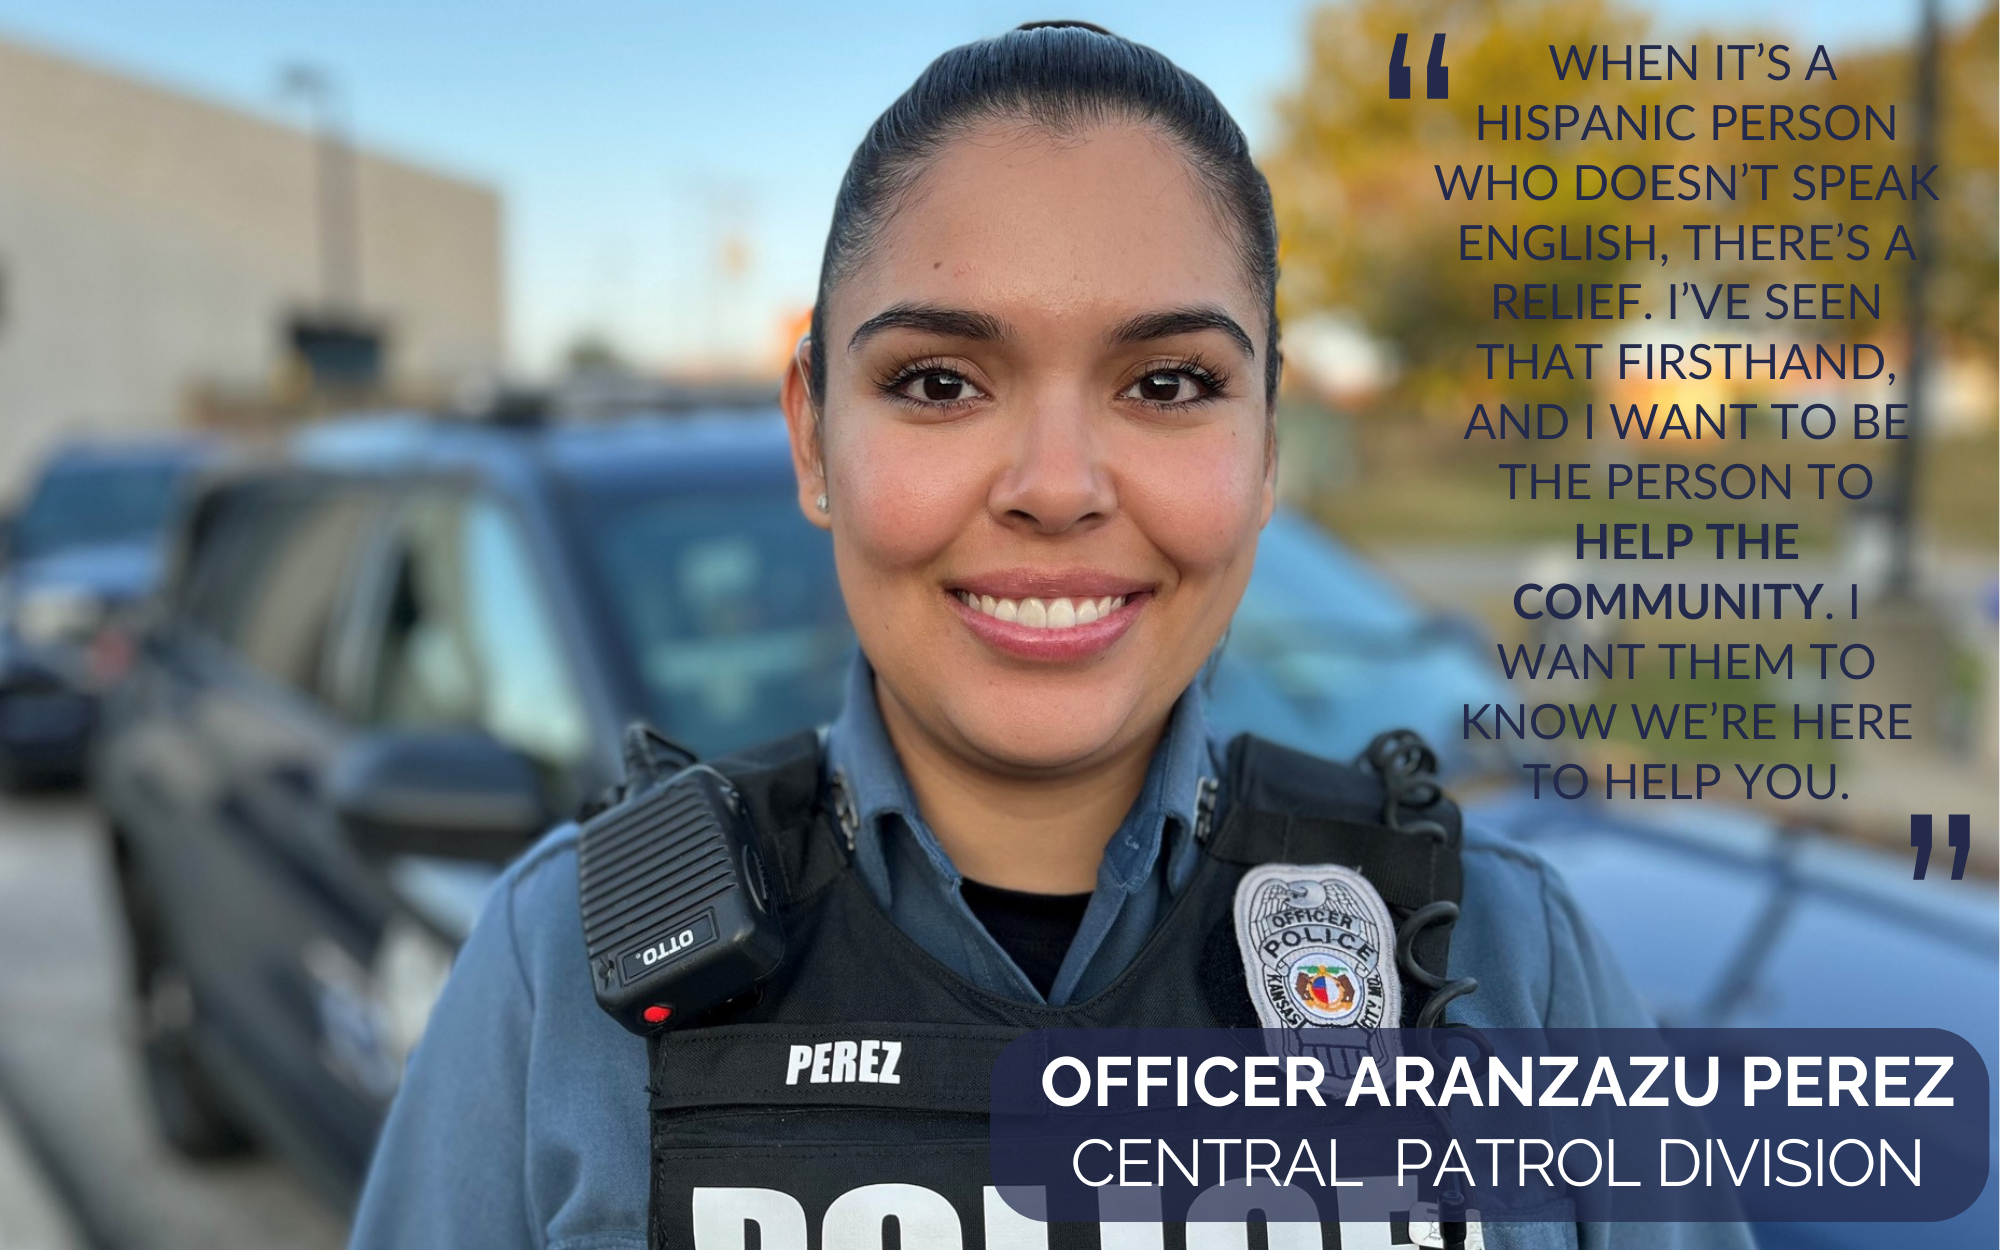 Officer Aranzazu Perez